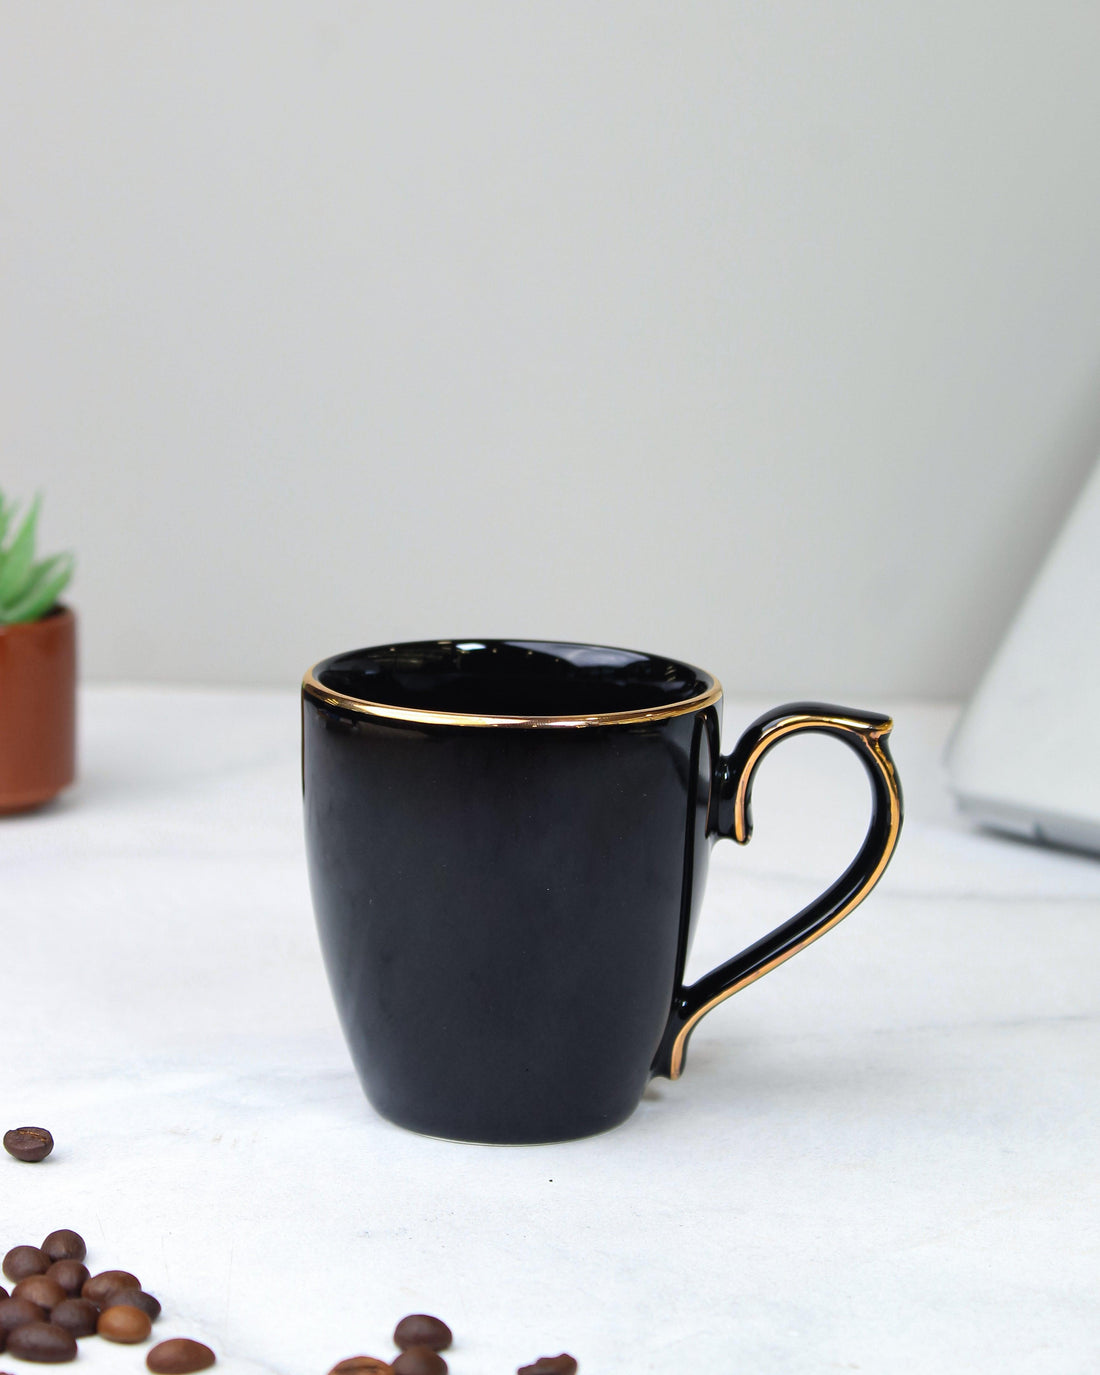 BLACK / Single pc * 220ml || Allure Premium Porcelain Tea/Coffee Mug with Golden Rim| Multi color (For CWI Testing)